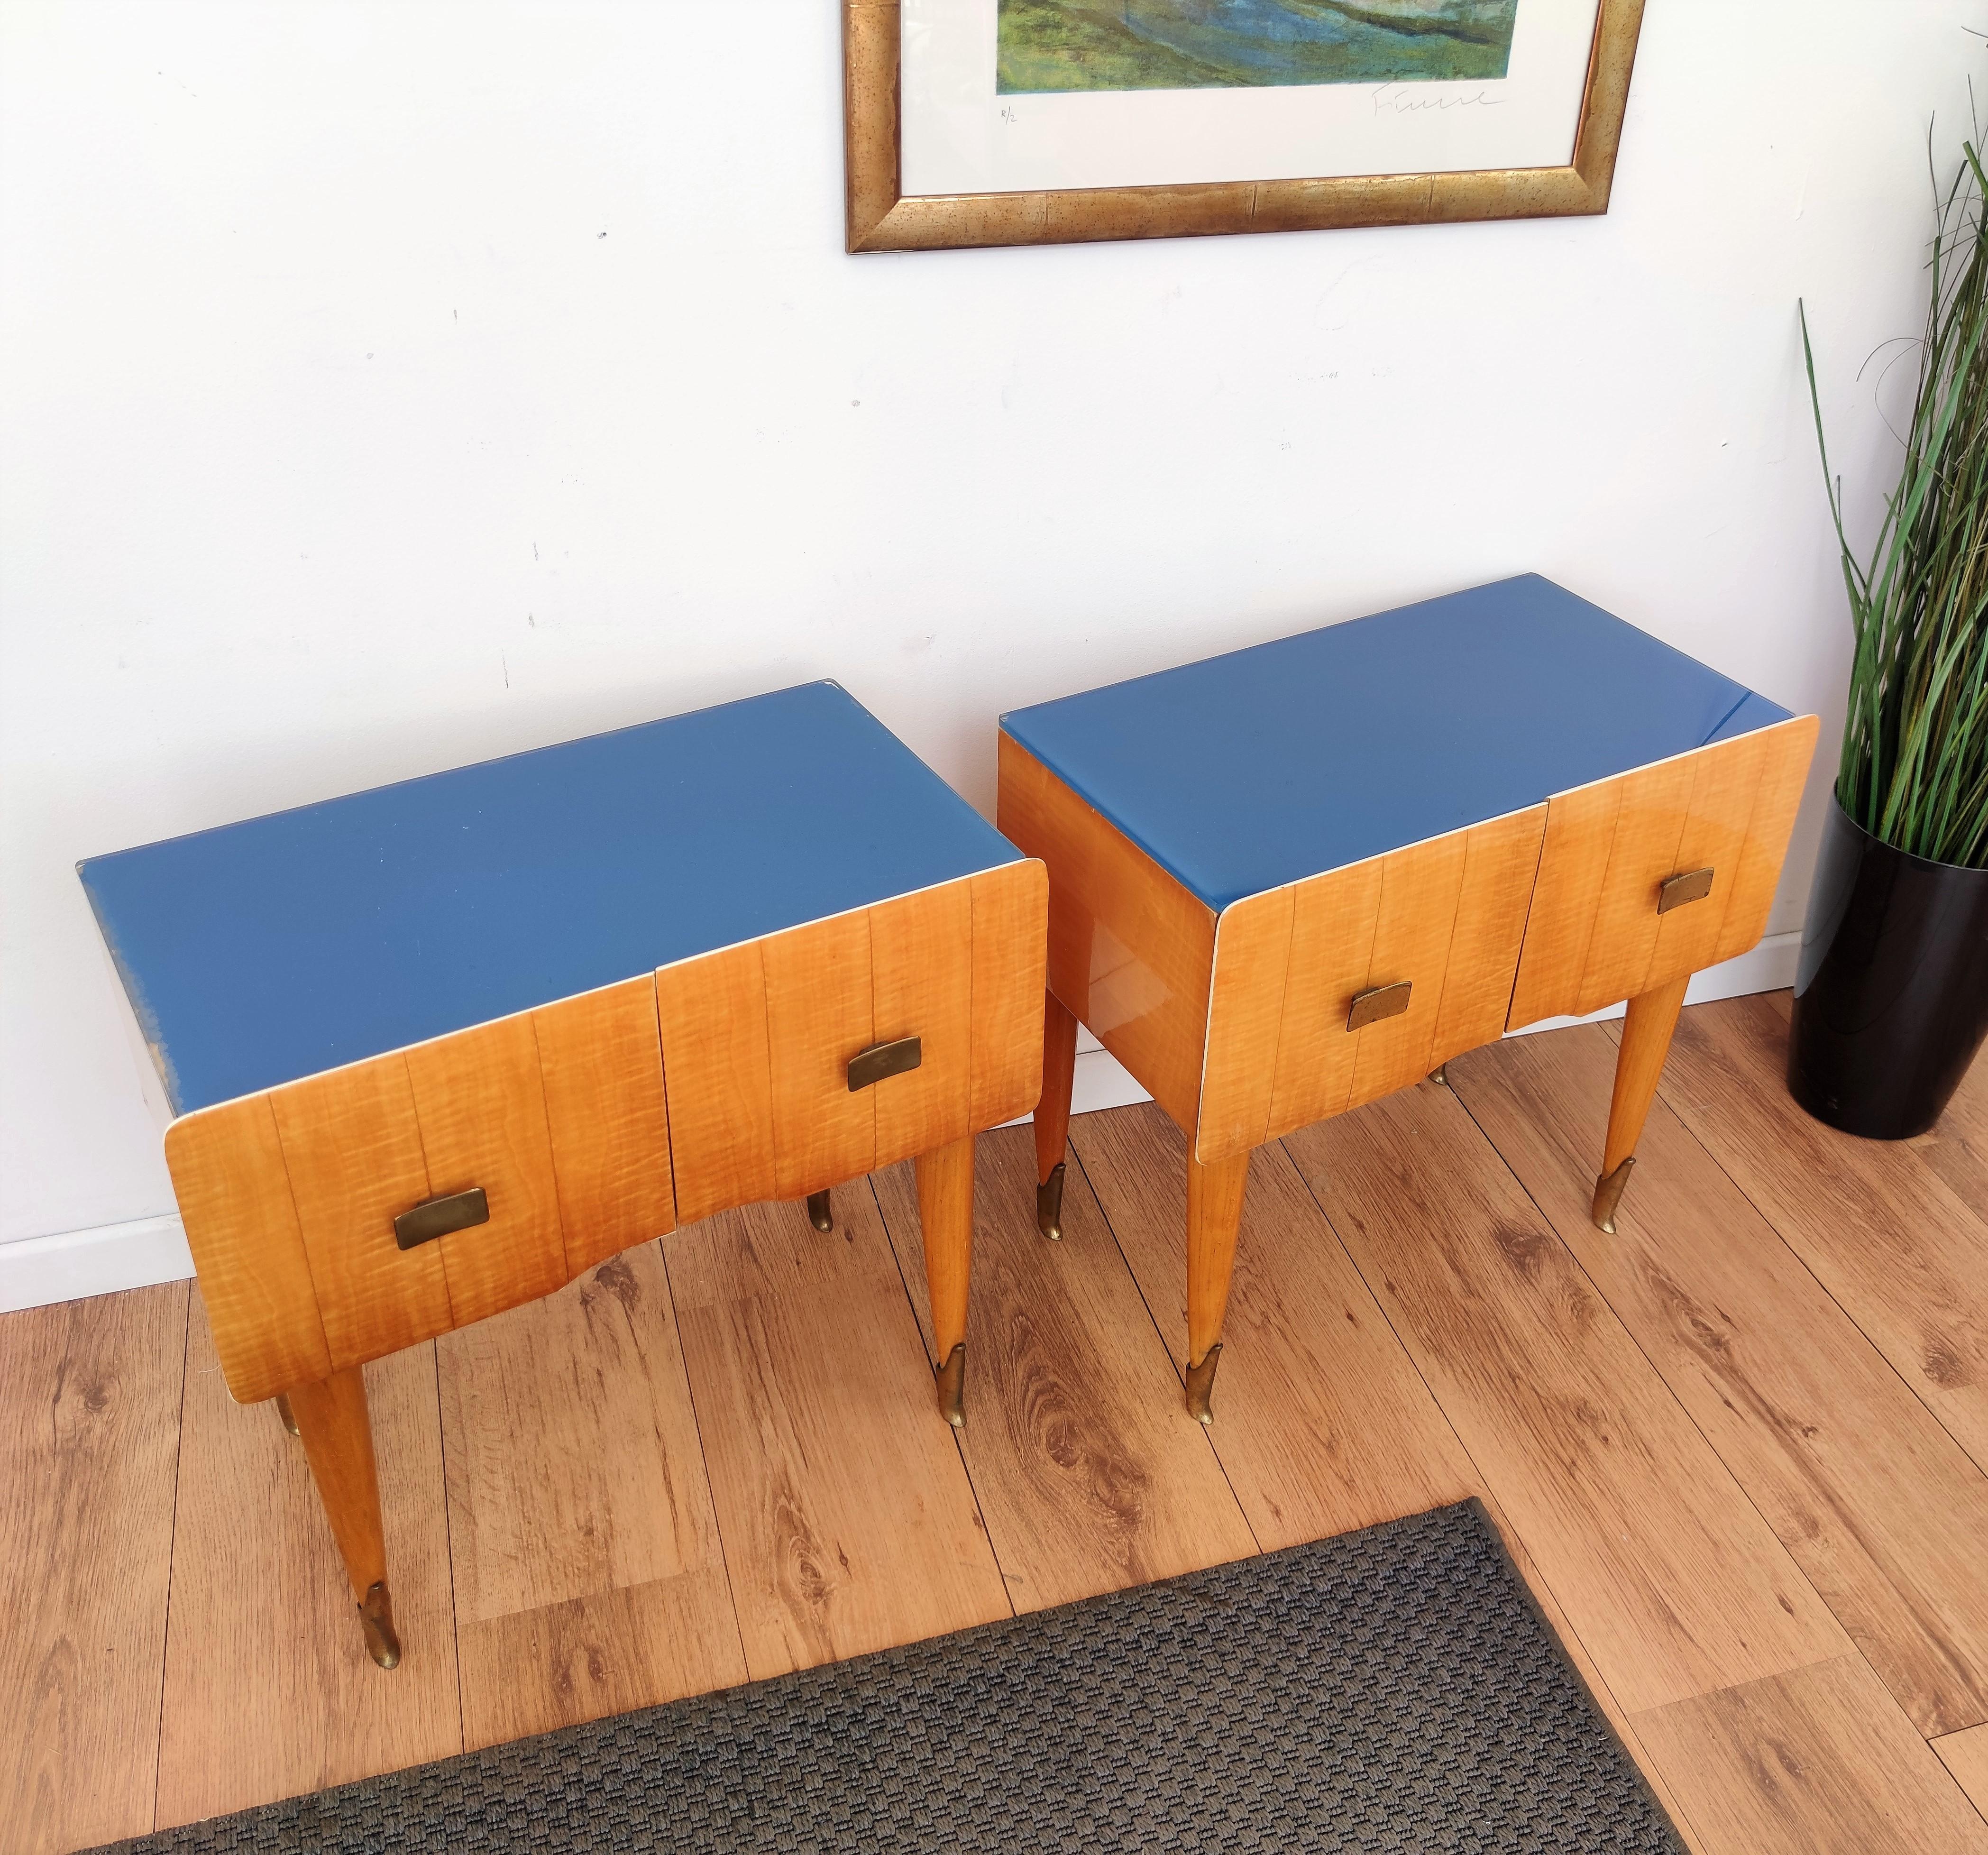 Pair of Italian Midcentury Art Deco Nightstands Bedside Tables Maple & Glass Top 1